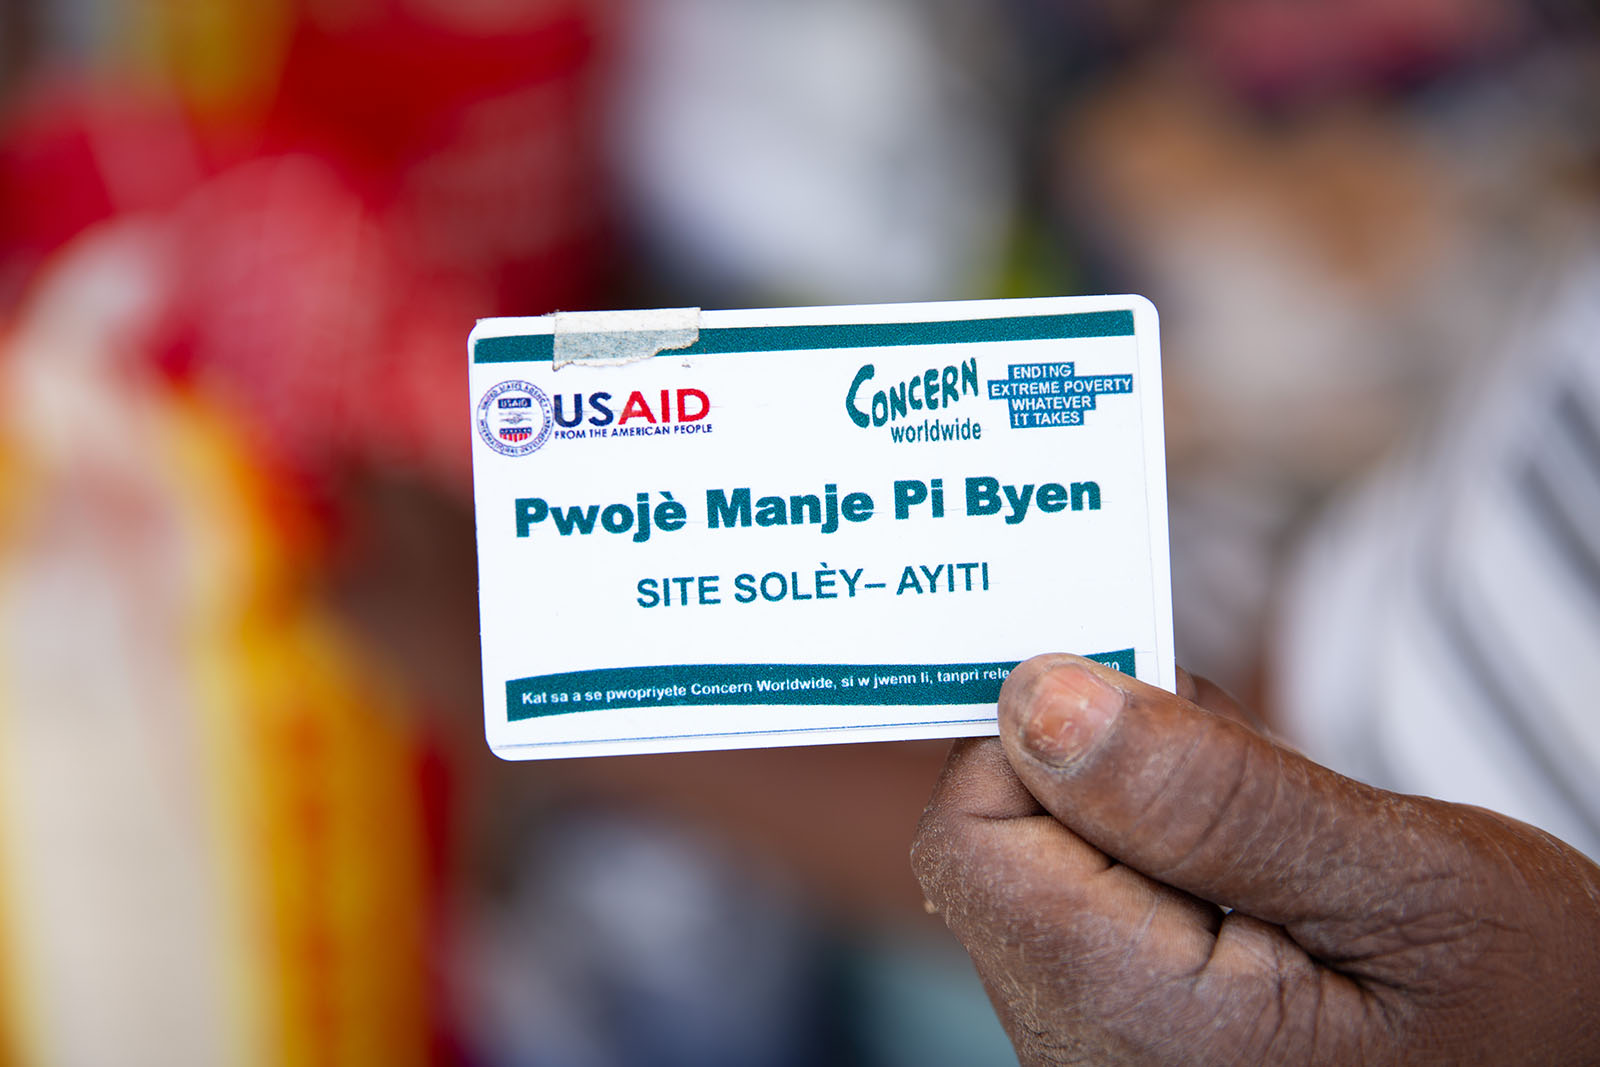 a e-payment card in haiti